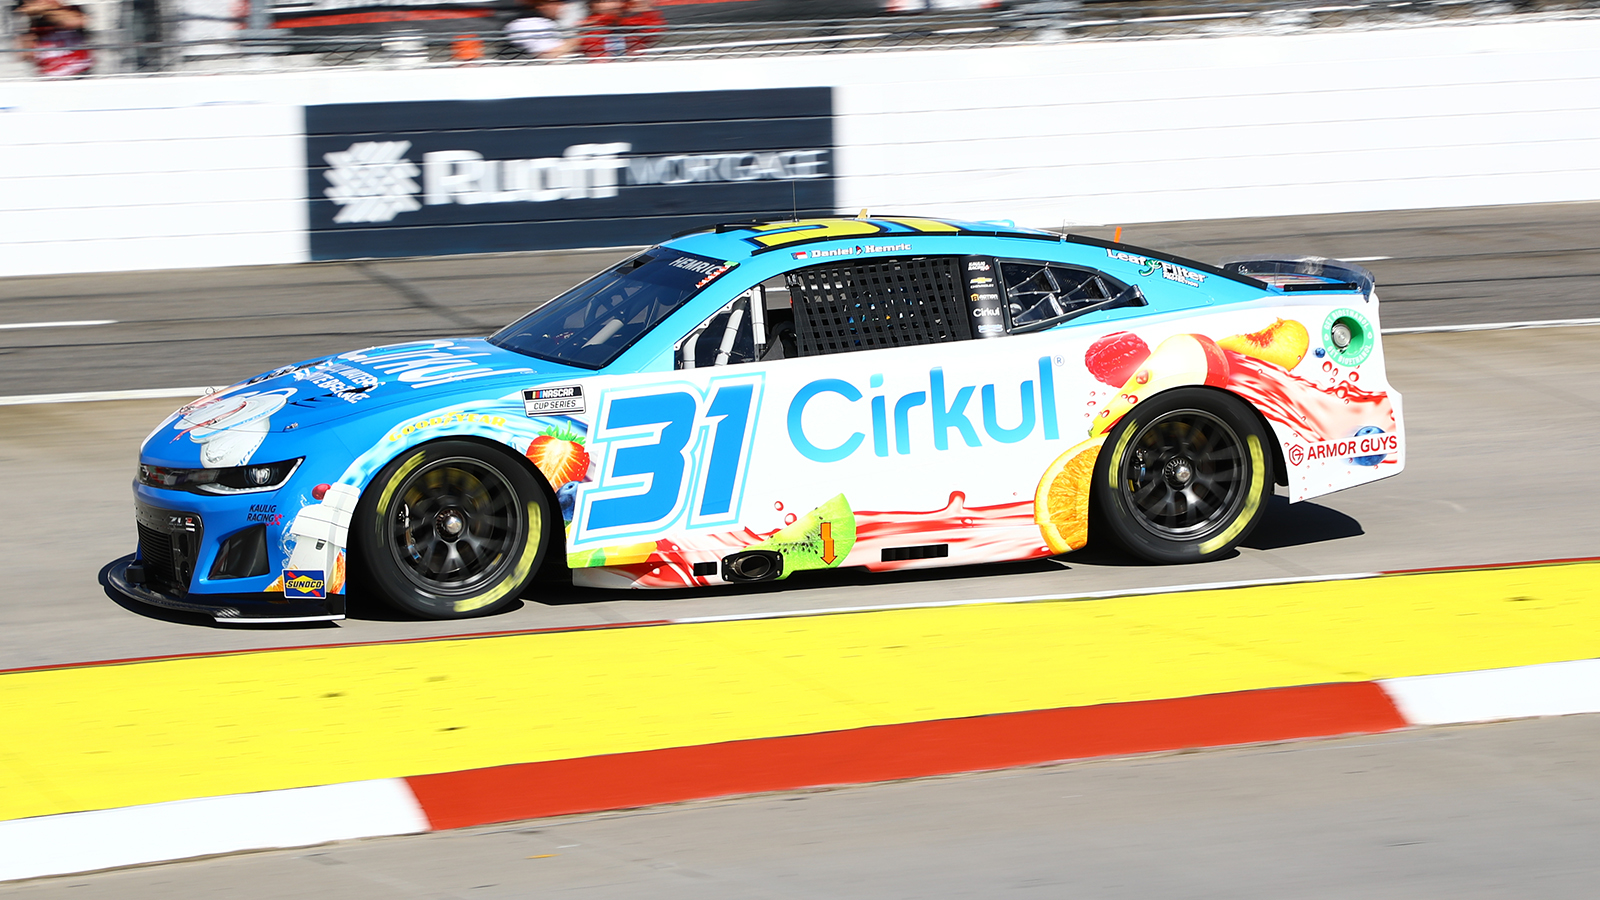 Daniel Hemric 2024 Cirkul paint scheme Kaulig Racing NASCAR Cup Series